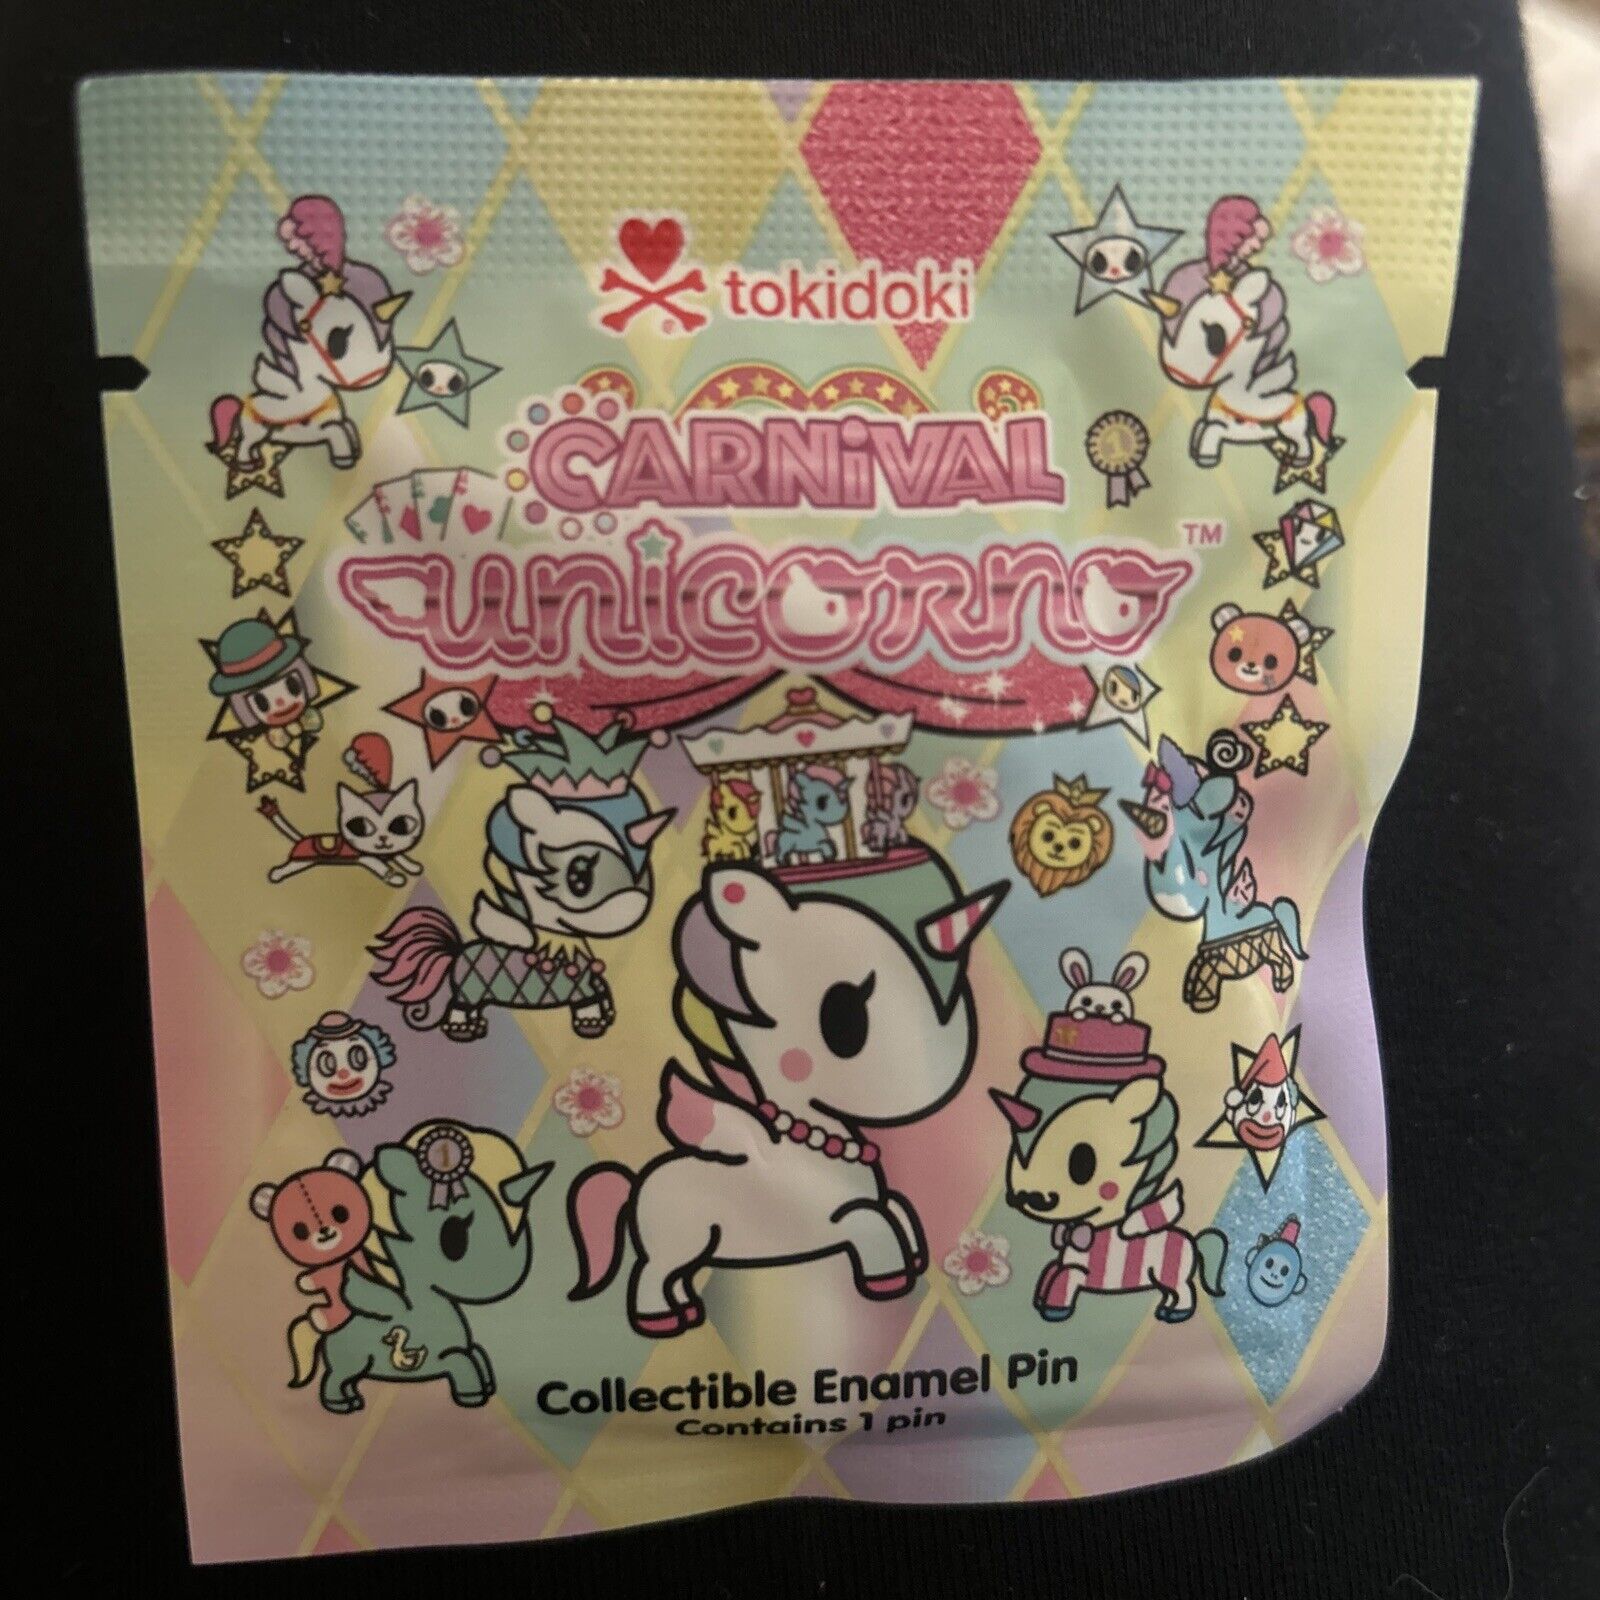 Tokidoki Carnival Unicorn Collectible Enamel Pin